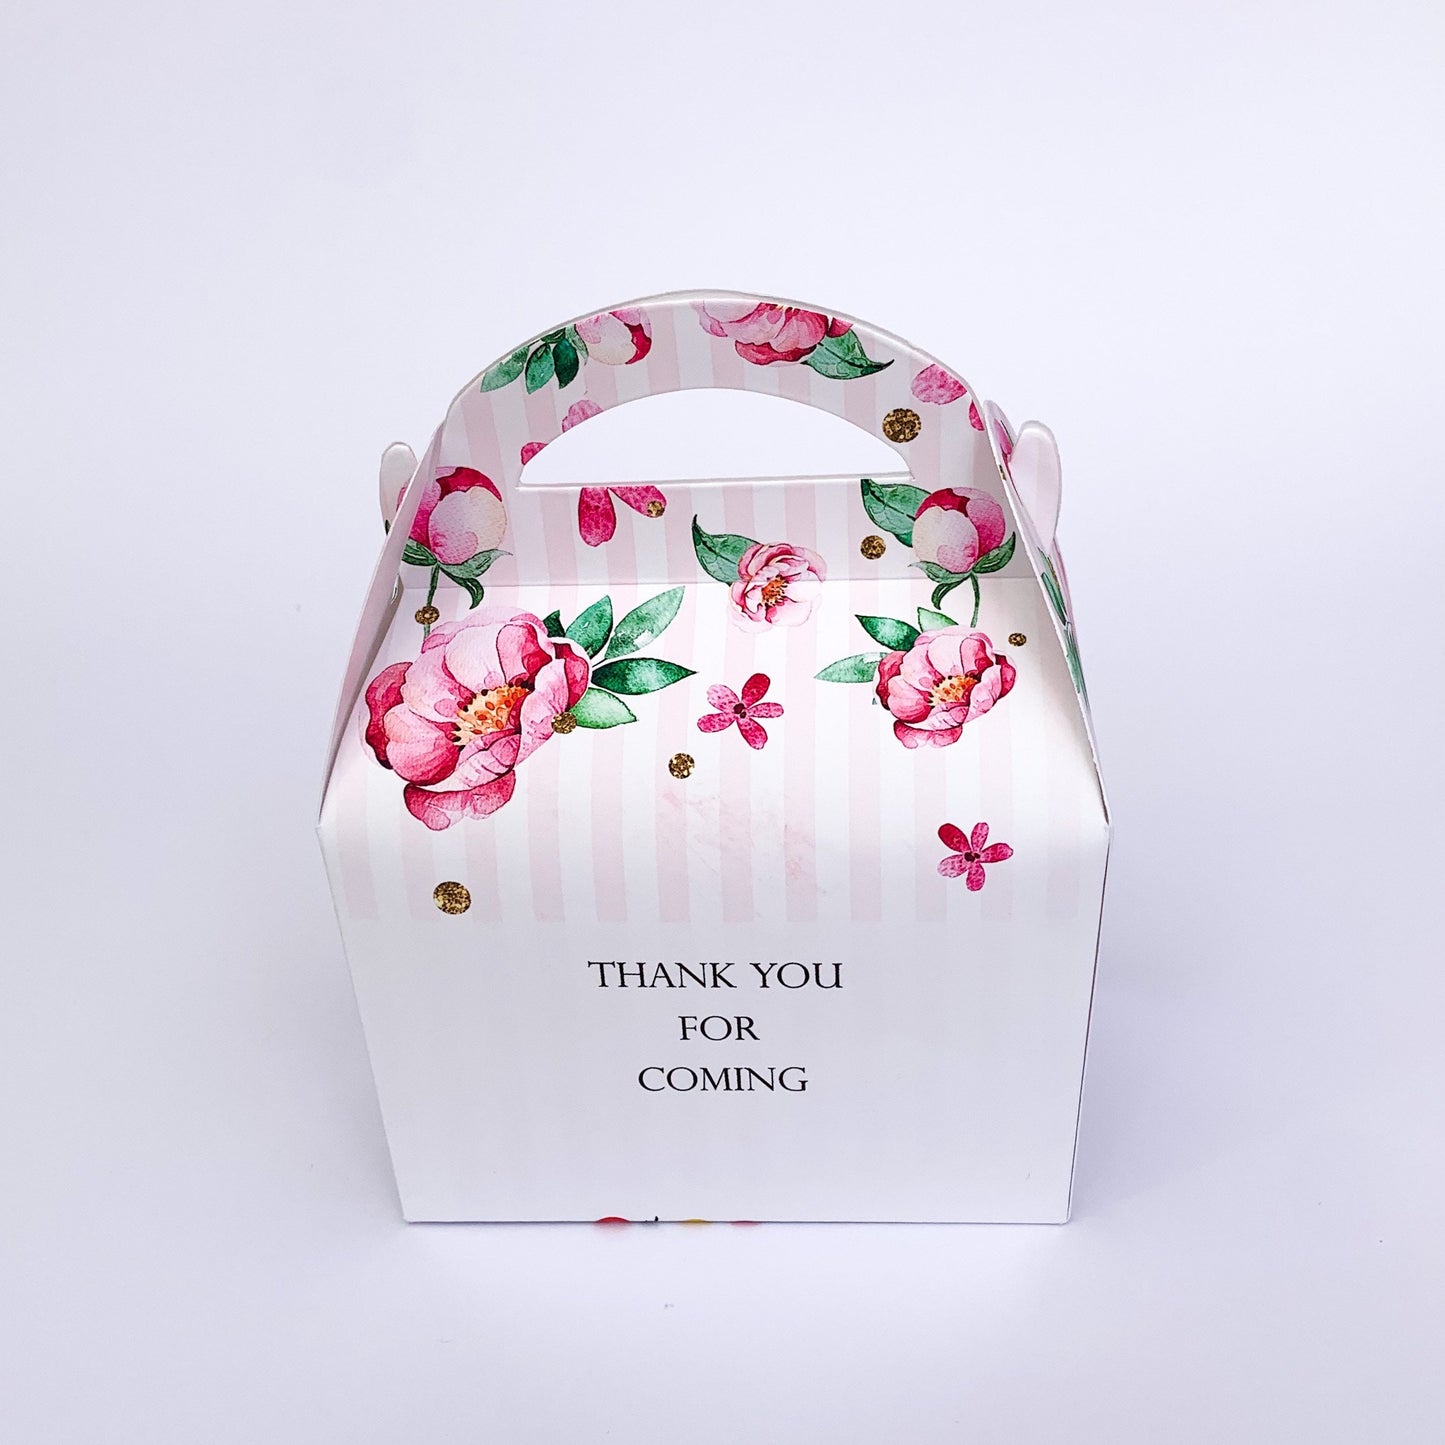 Pink Floral Bridal Shower Hen Party Wedding Children's Gift Treat Box favour